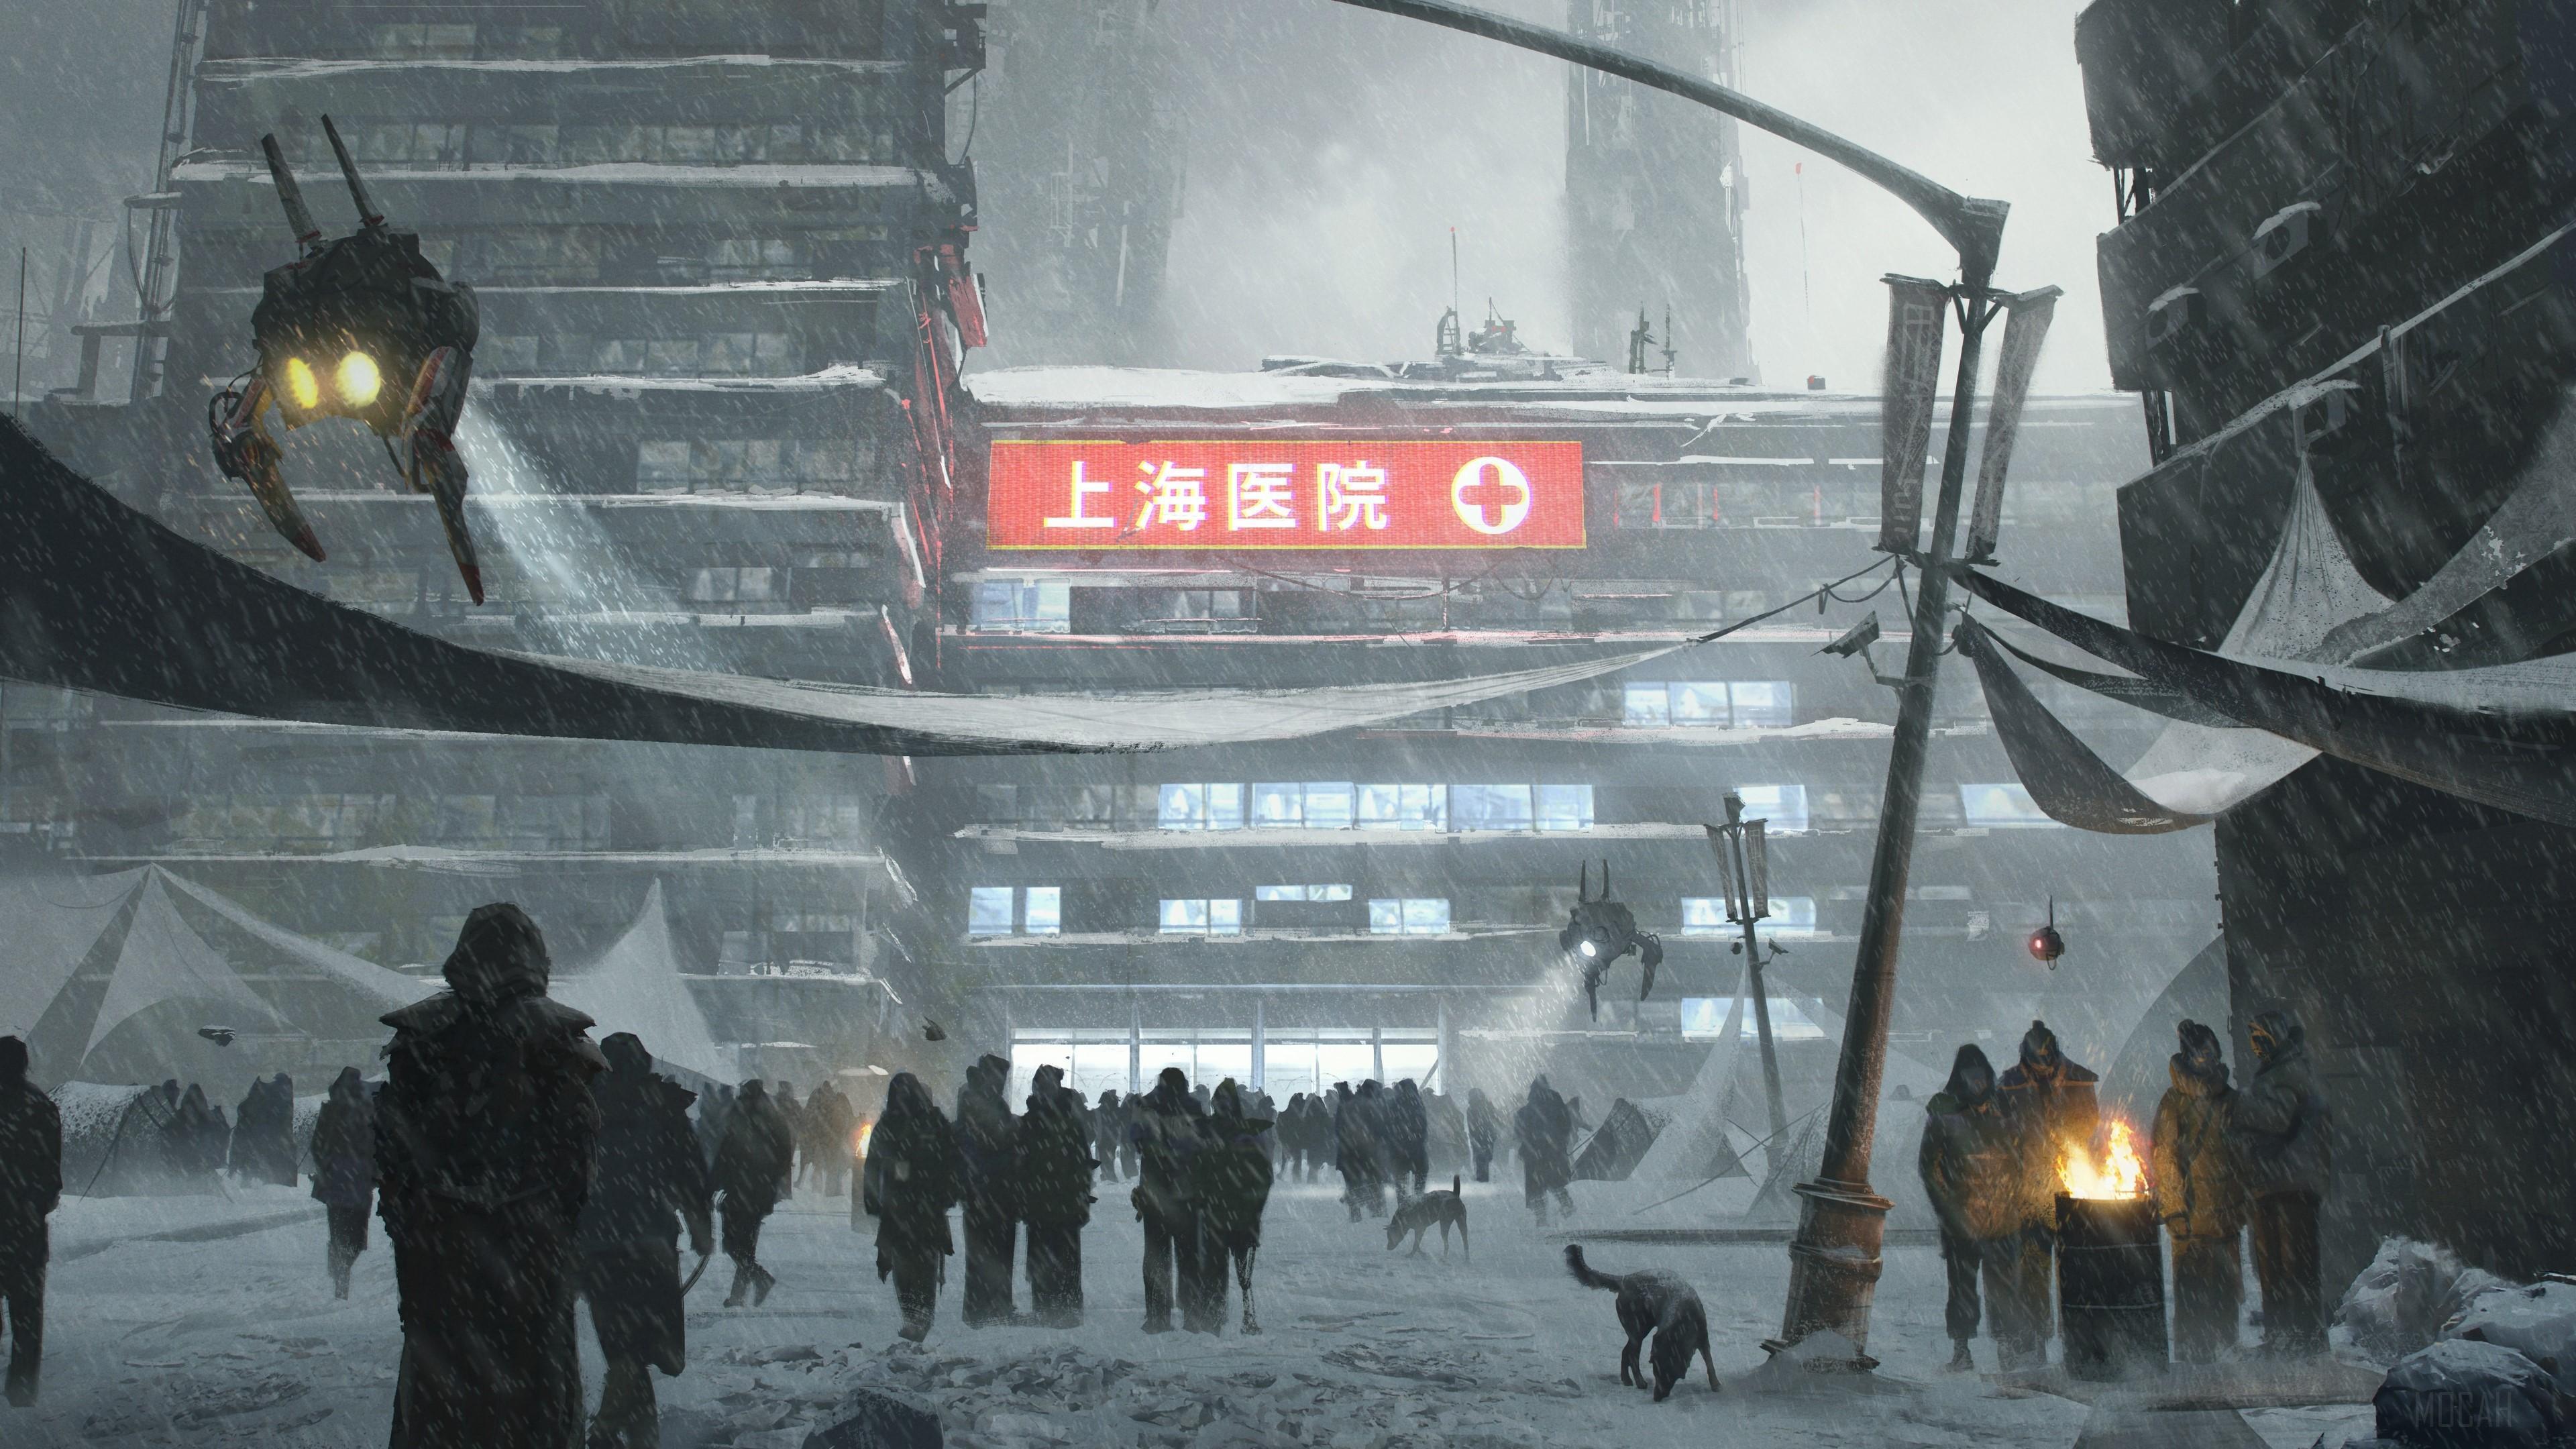 HD wallpaper, Snowfall, Robot, Cyberpunk, Snow, People, Building, Winter 4K